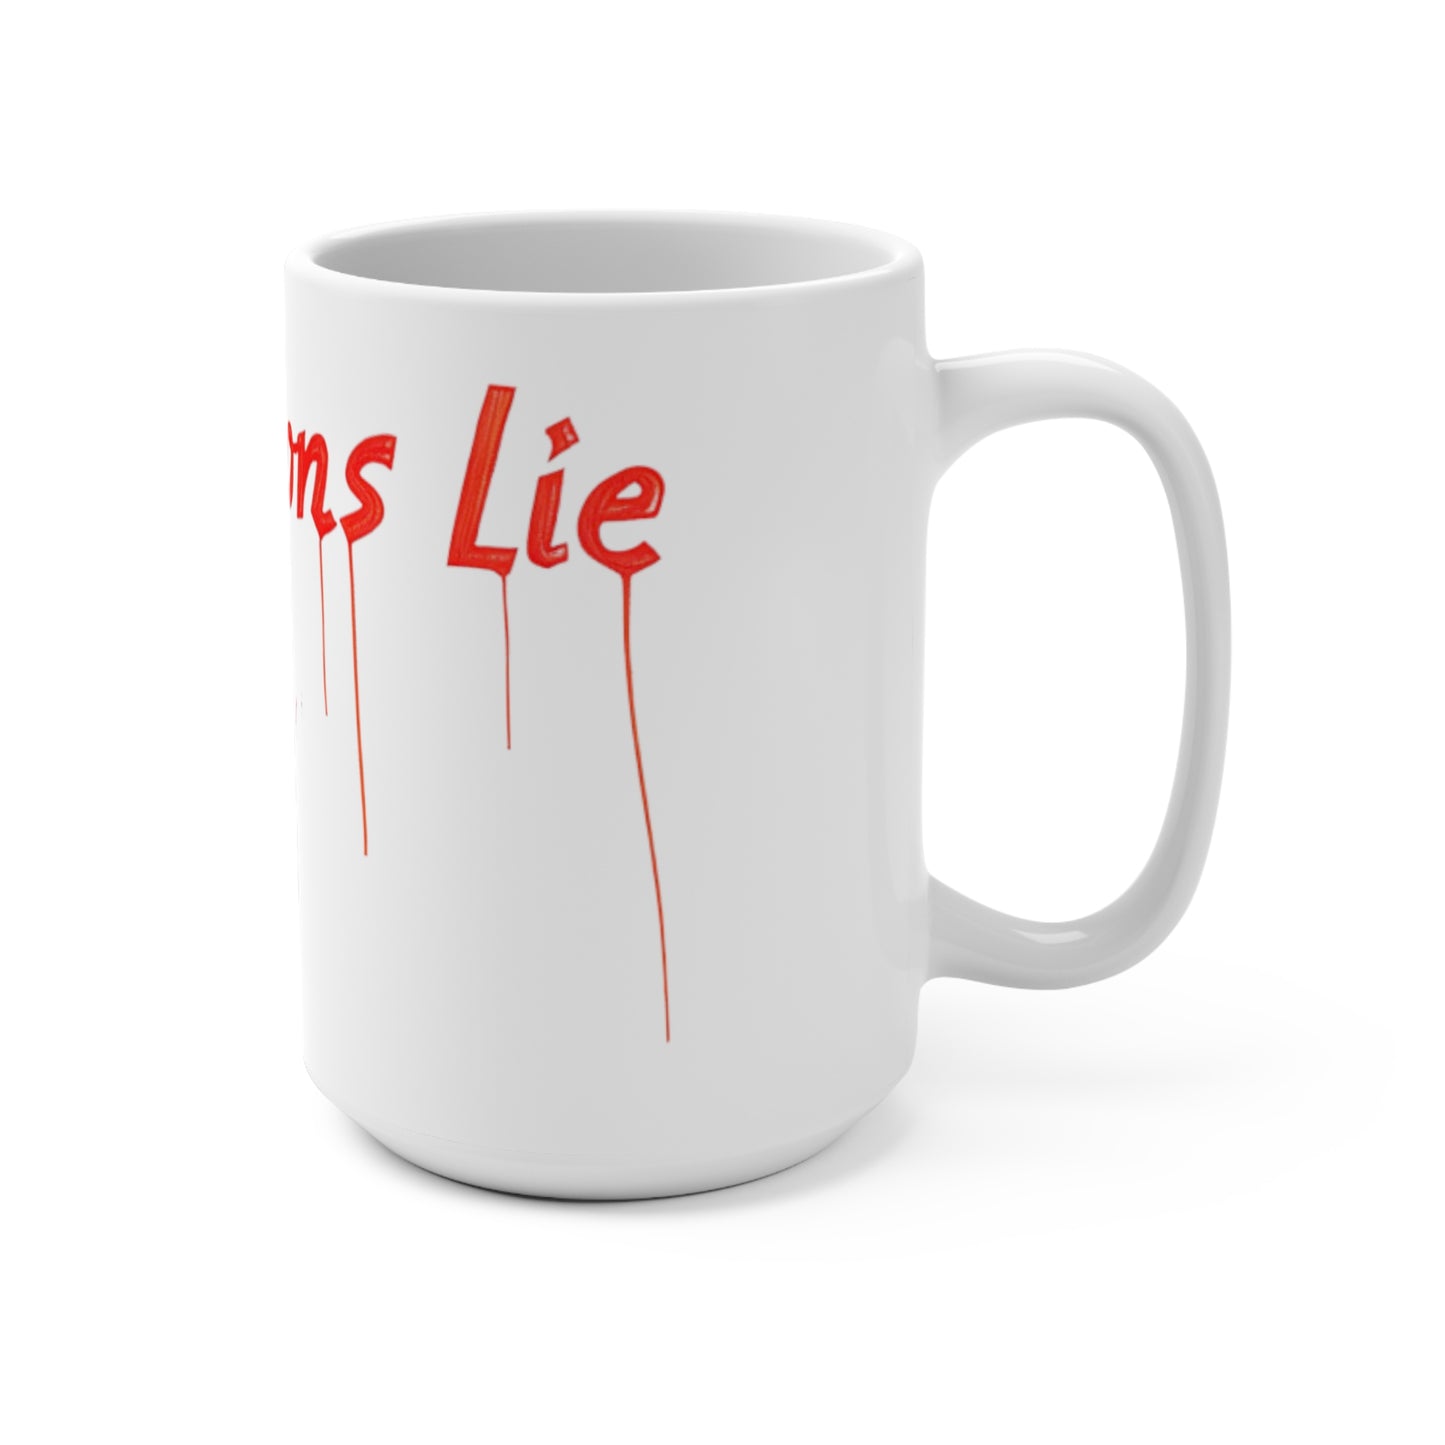 Corporations Lie Ceramic Mug (15oz) Political Mug Anit Corporate Greed Mug Liberal Activist Statement Mug